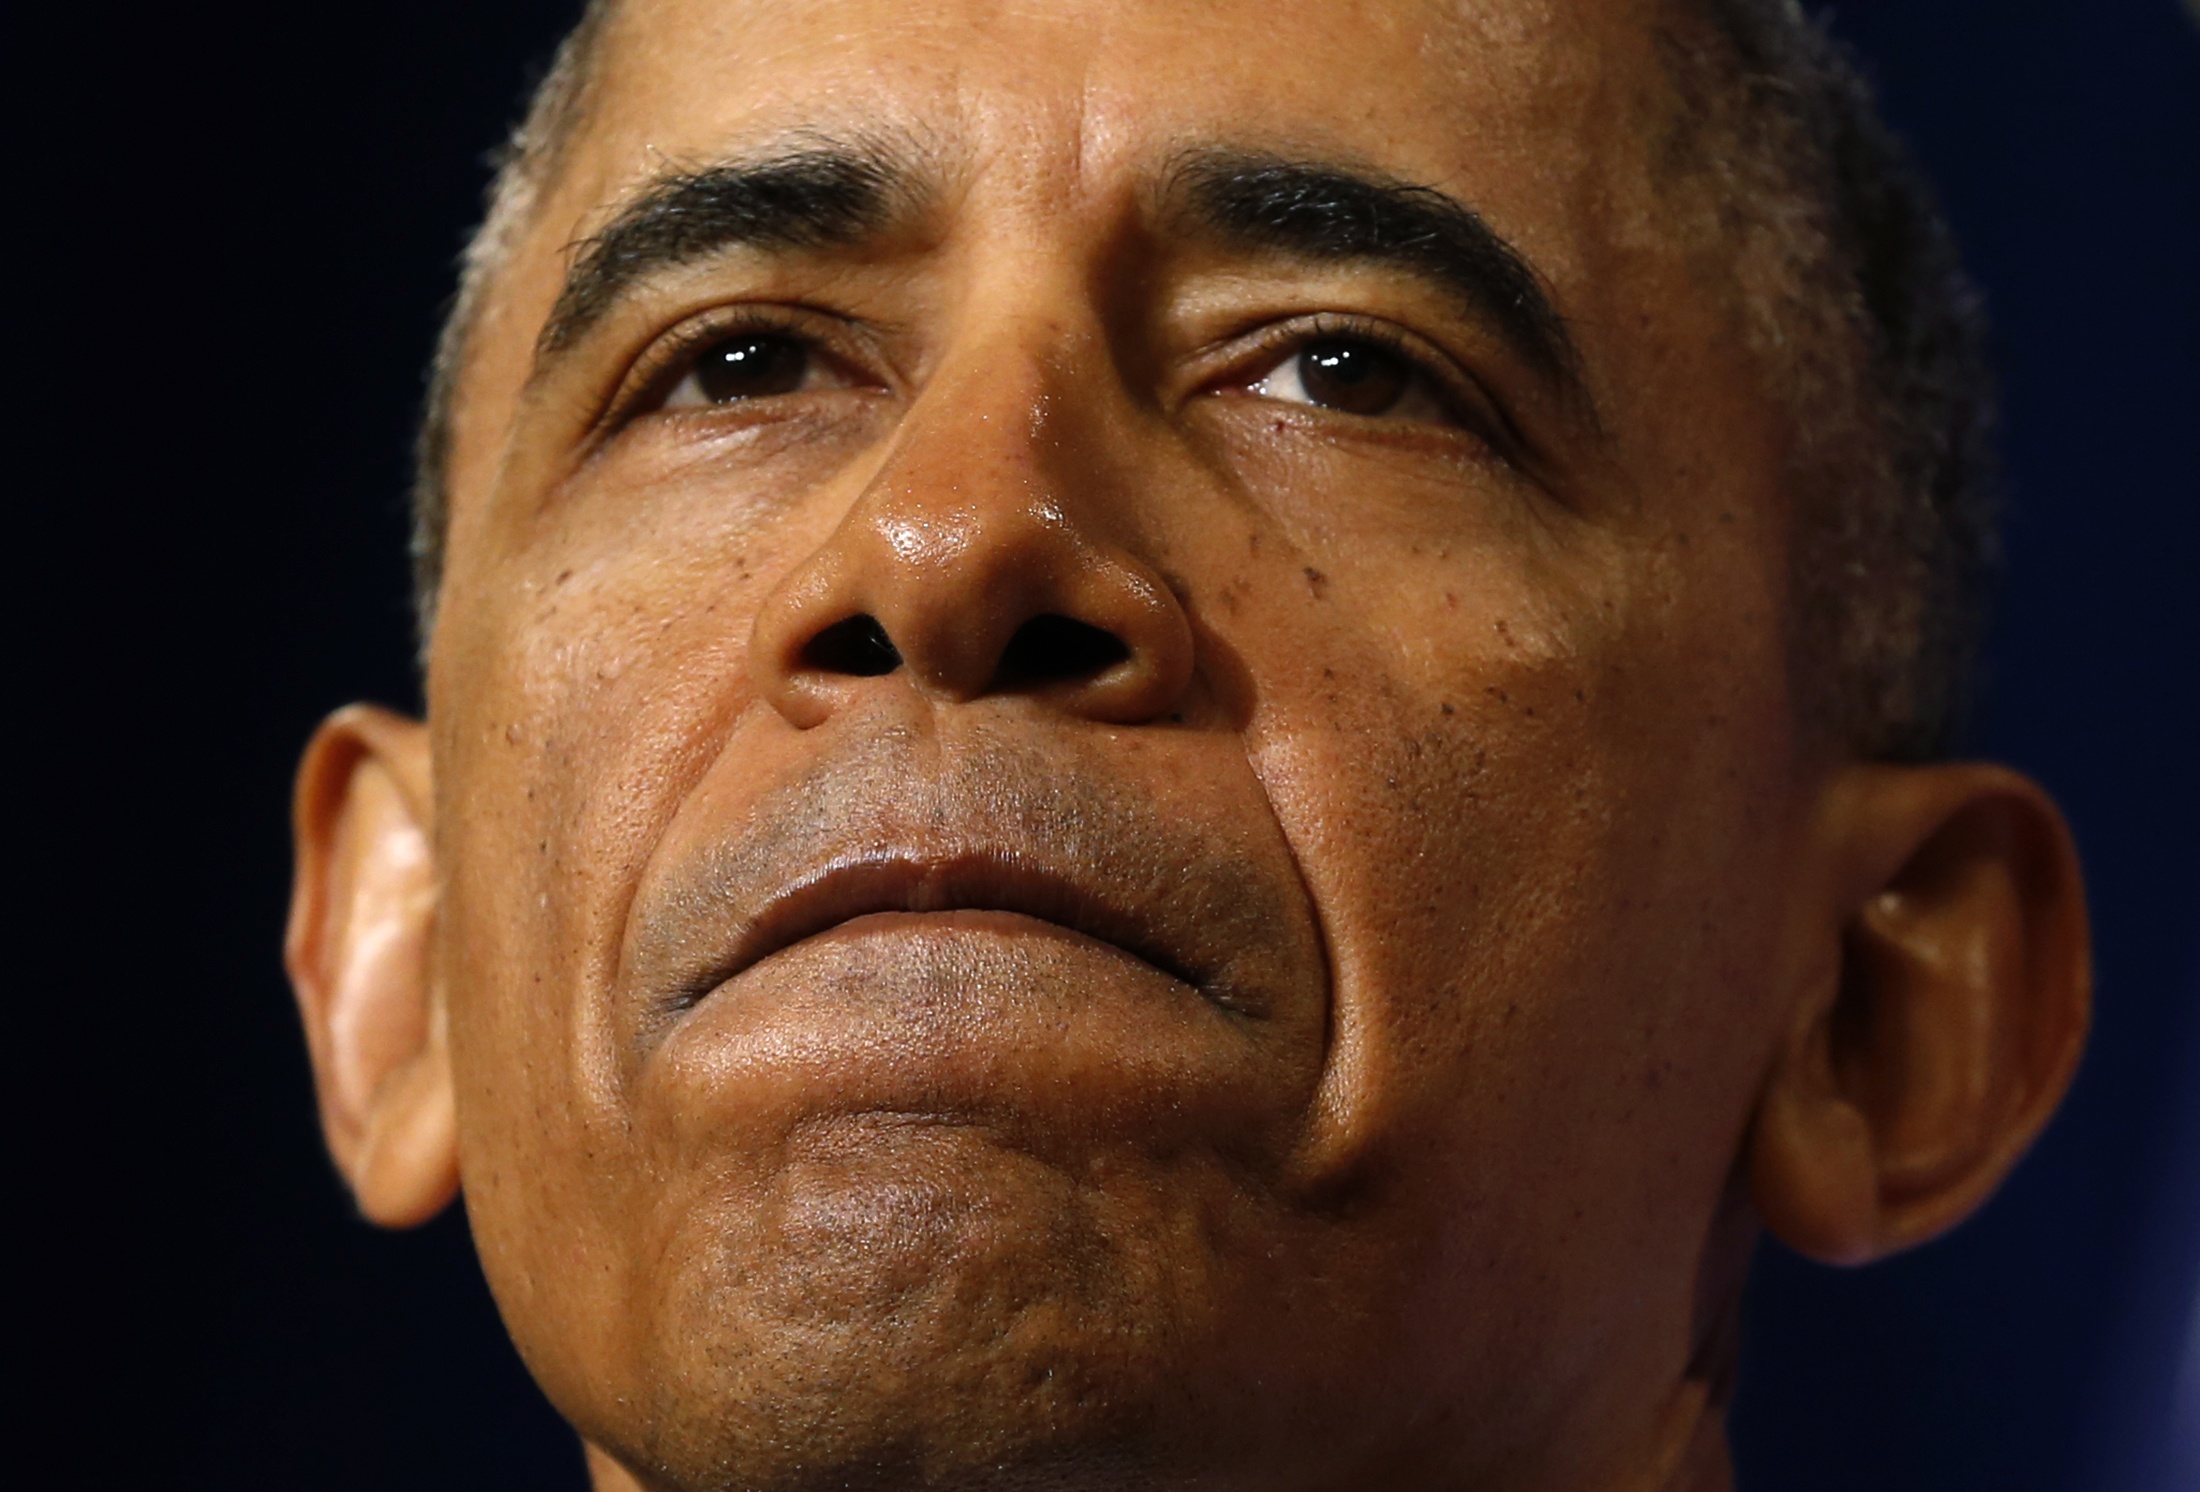 Obama pondrá freno al espionaje de líderes extranjeros aliados